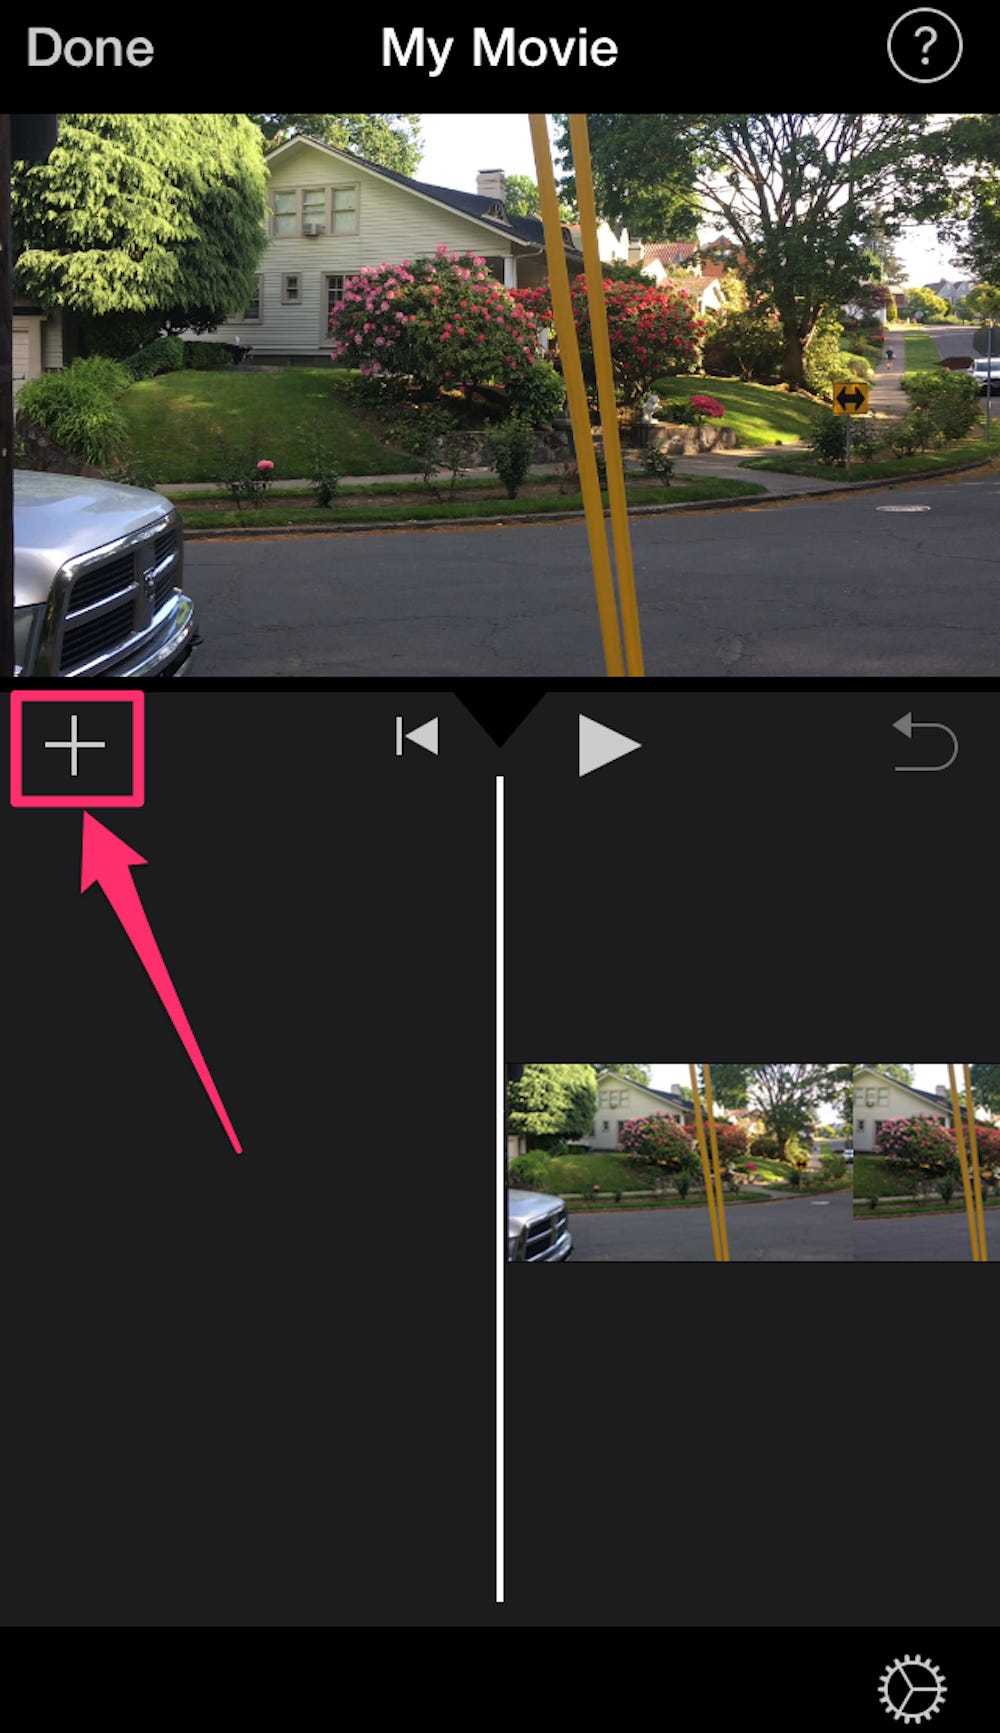 iMovie on iPhone plus sign icon